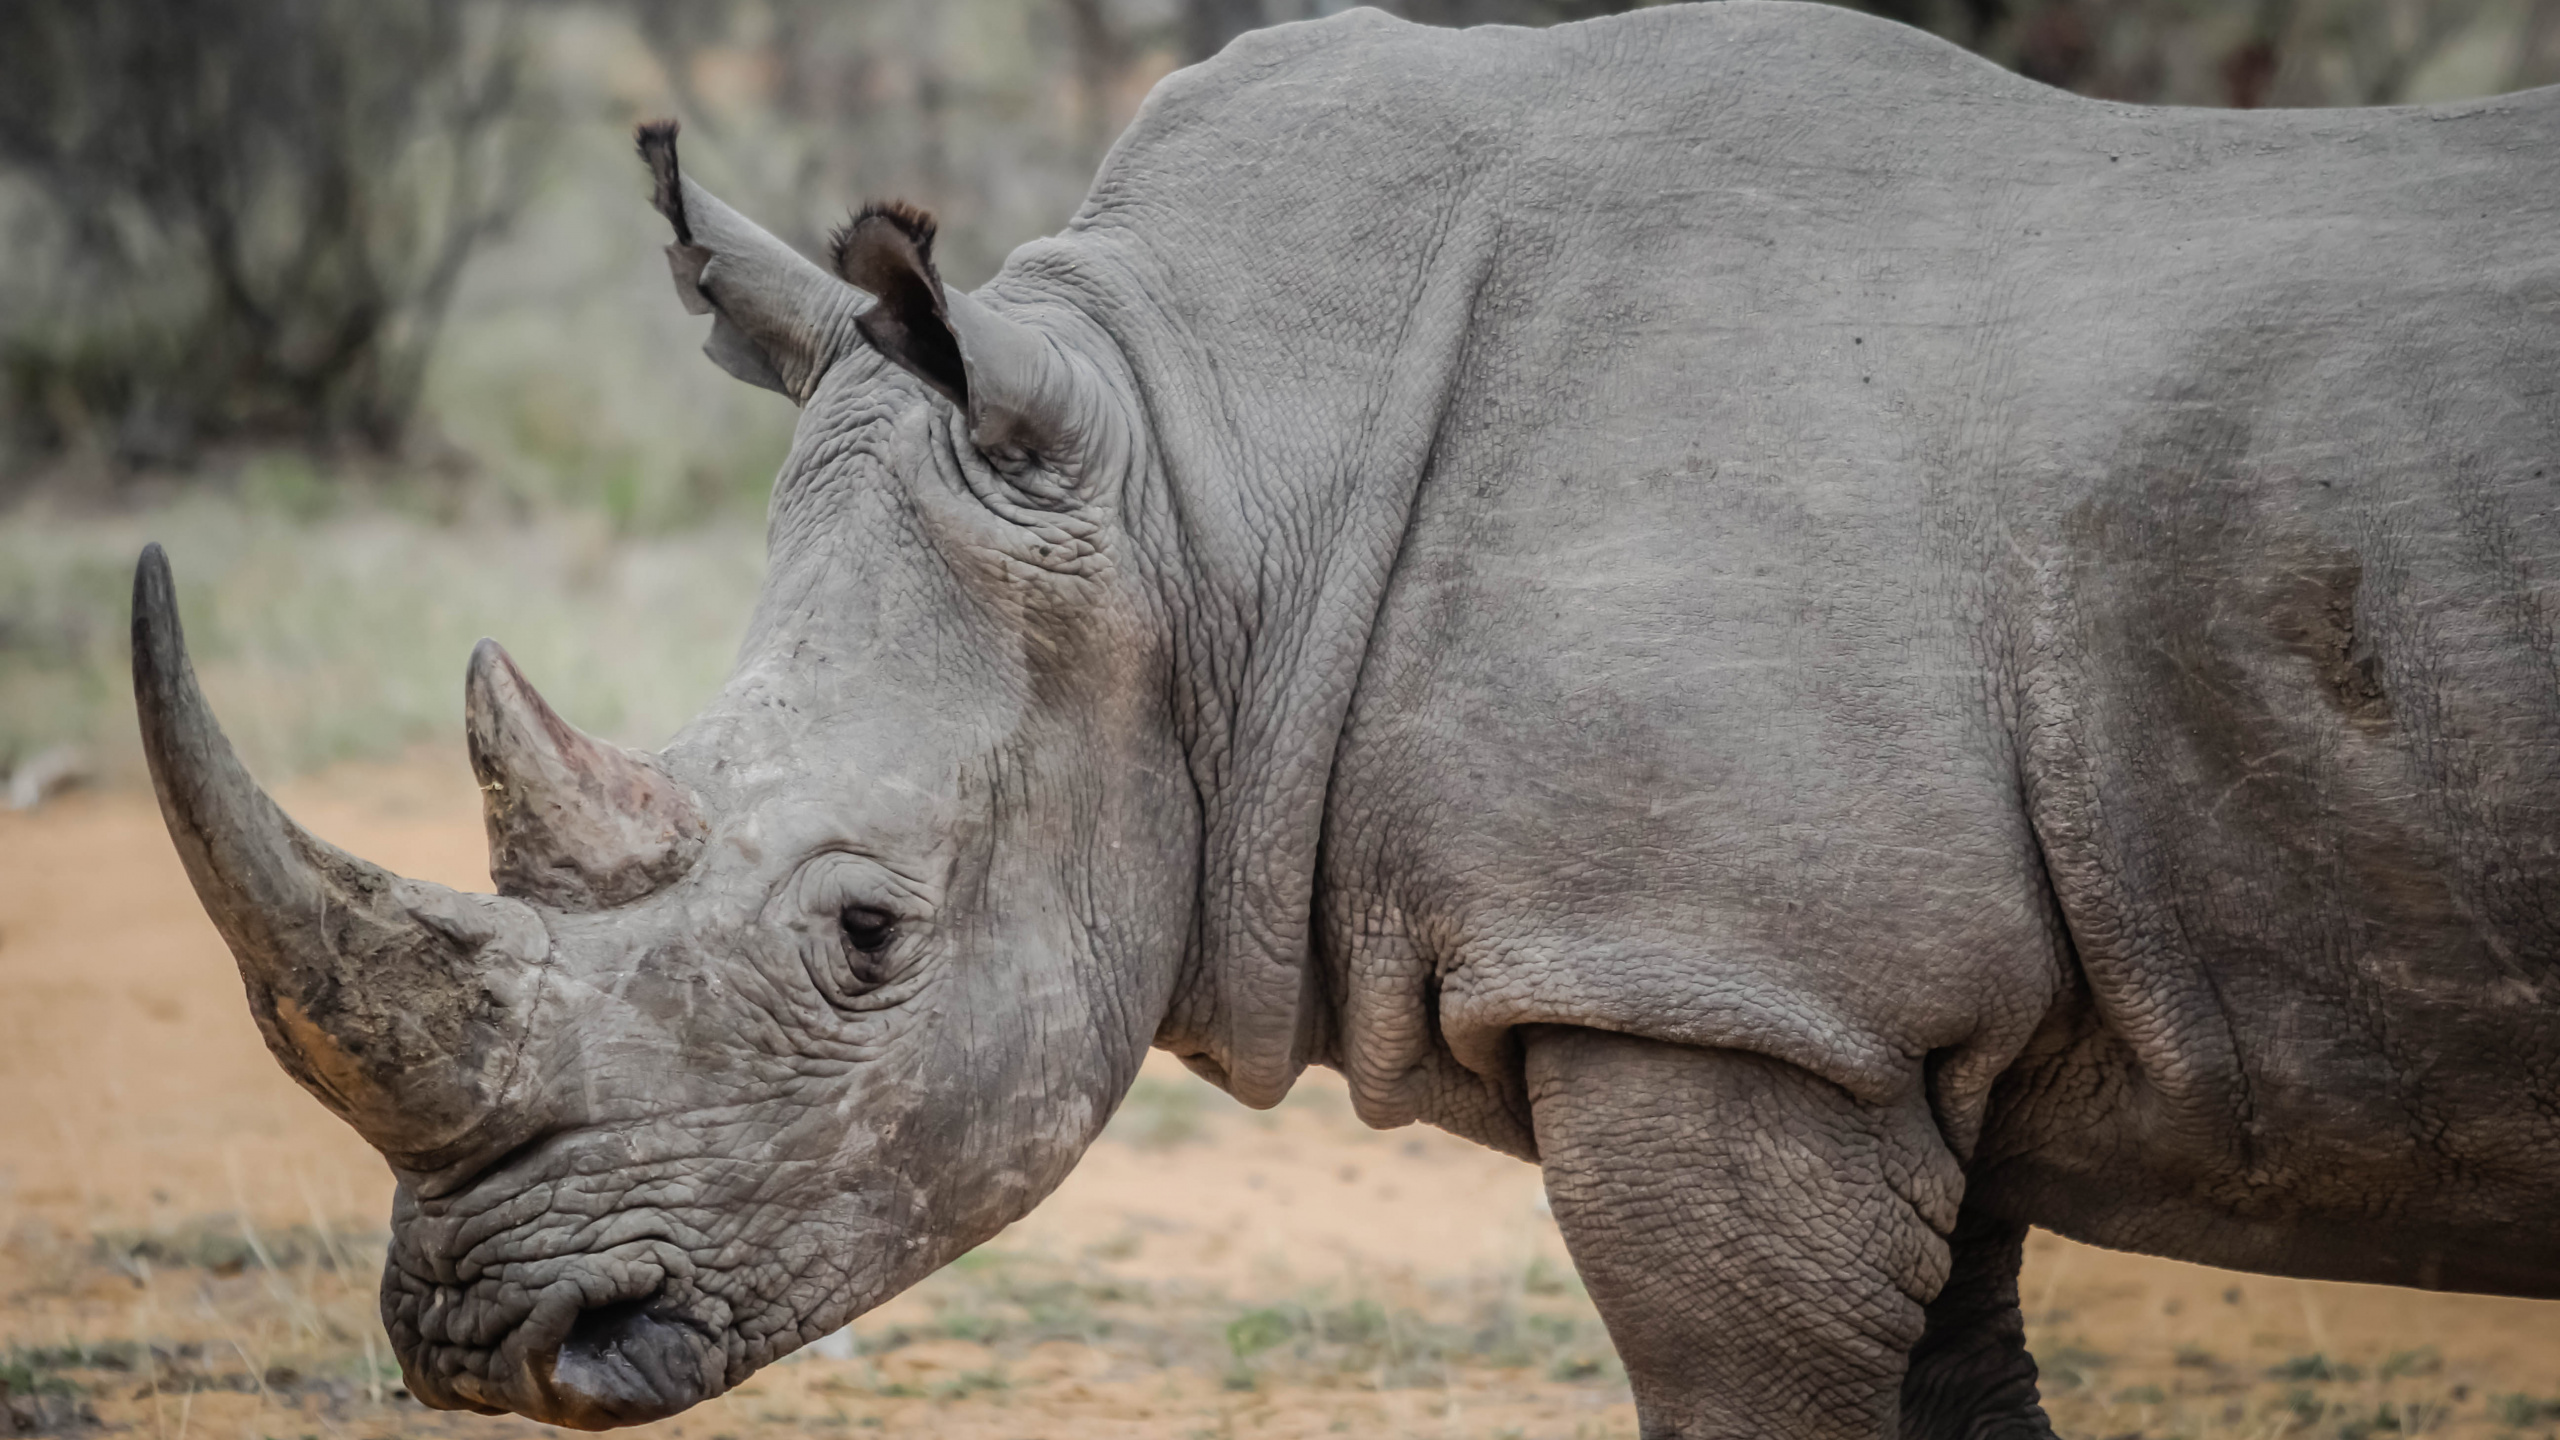 Grey Rhinoceros on Brown Ground During Daytime. Wallpaper in 2560x1440 Resolution